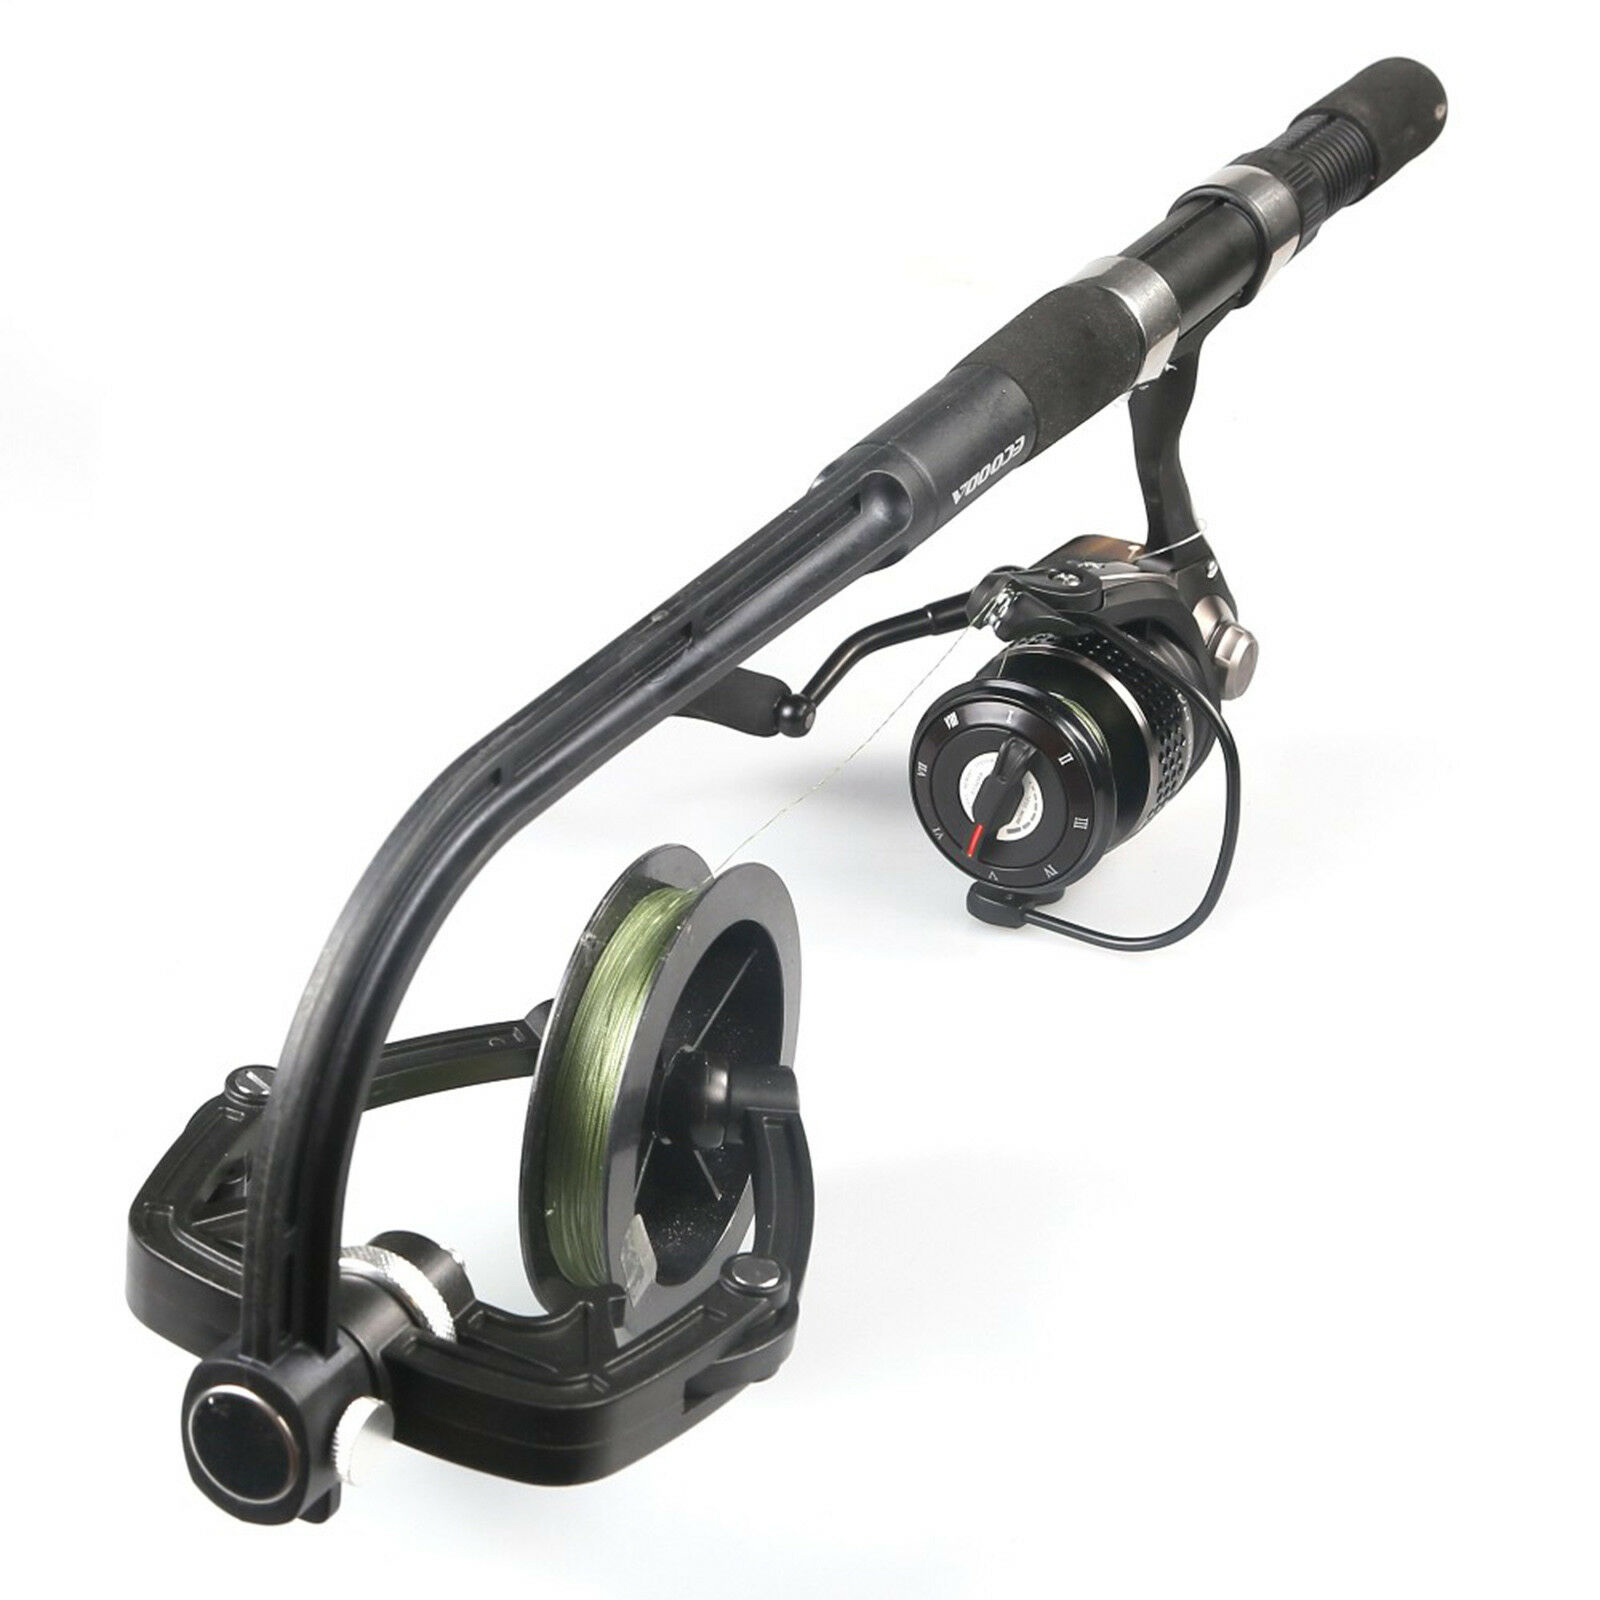 1set Fishing Line Winder, Spooler Machine For Spinning Reel, Baitcasting  Reel Spool And Trolling Reel, Fishing Accessories